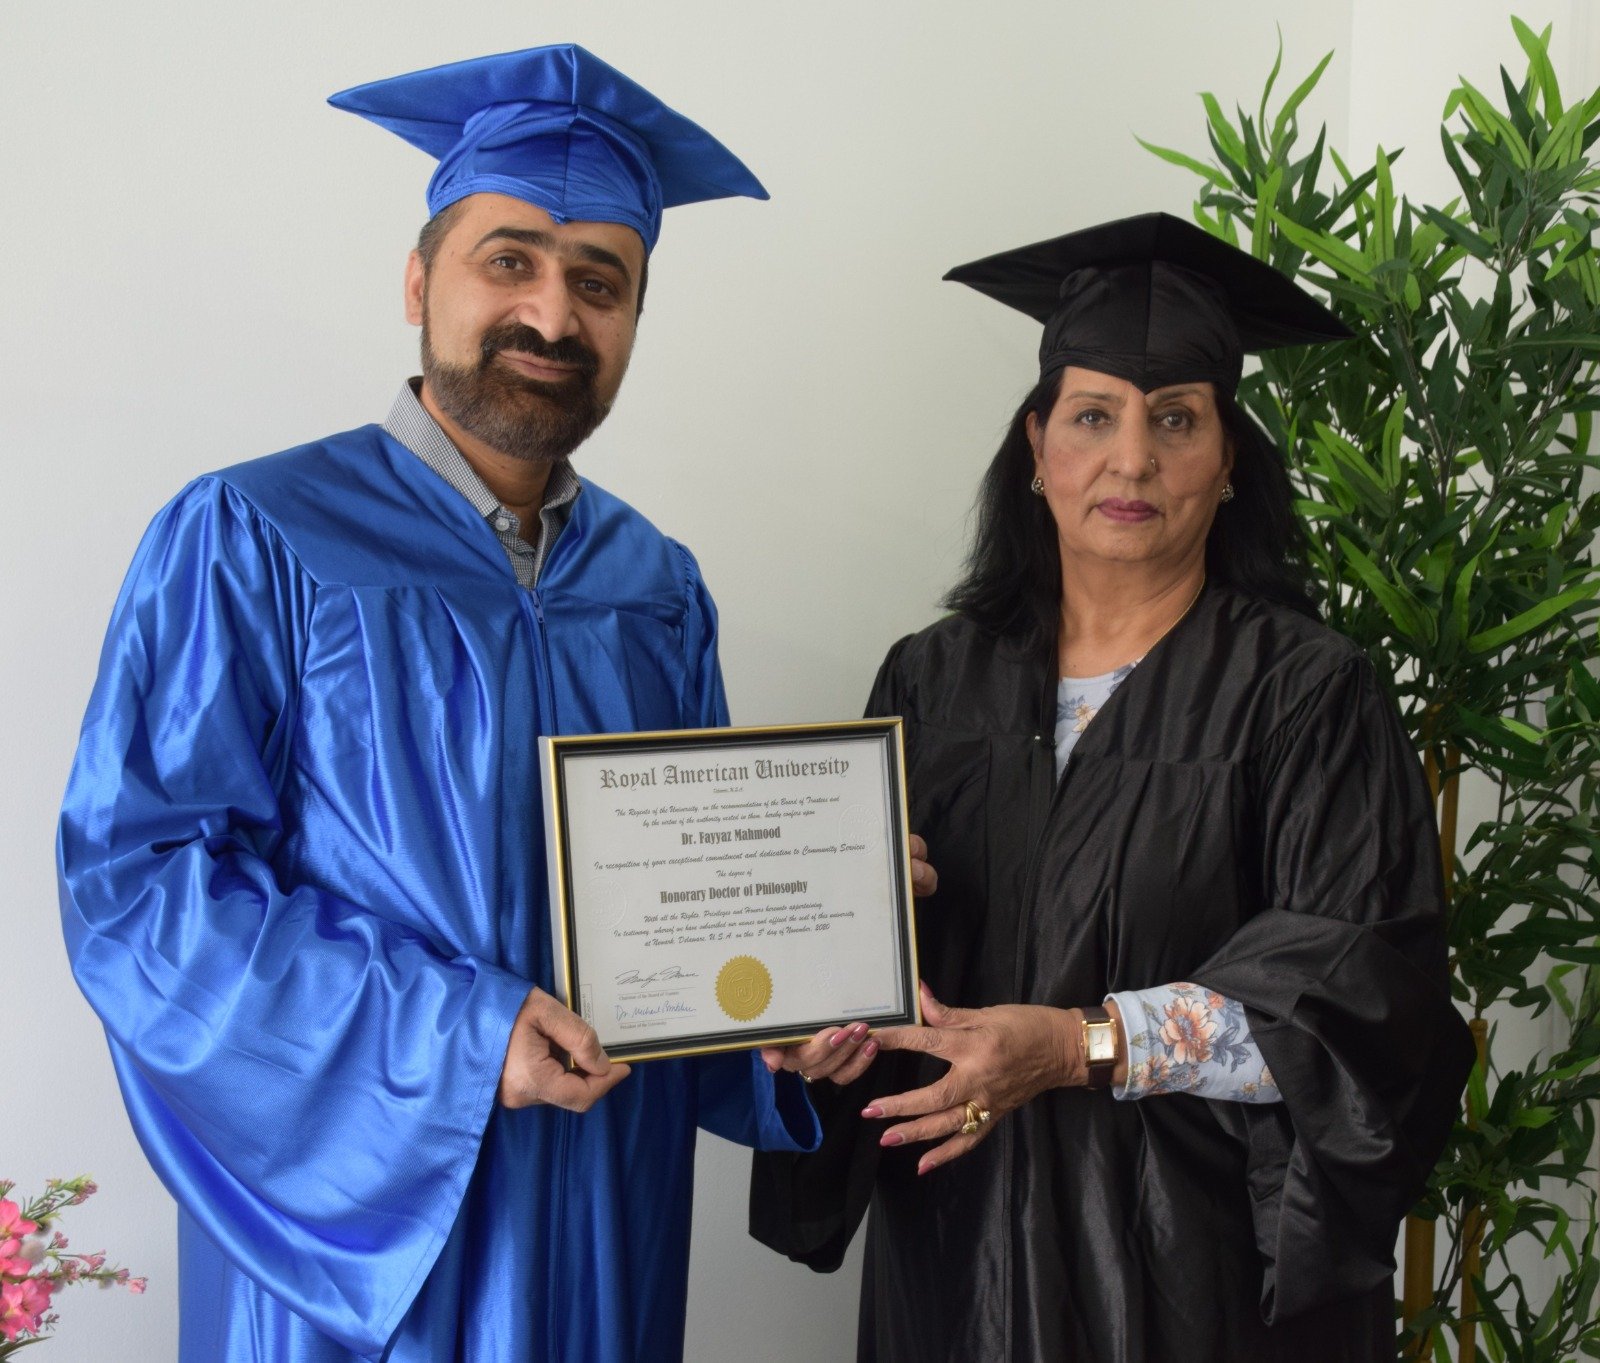 Honorary doctorate degree for Fayyaz Mahmood, Advisor to Saudi Government